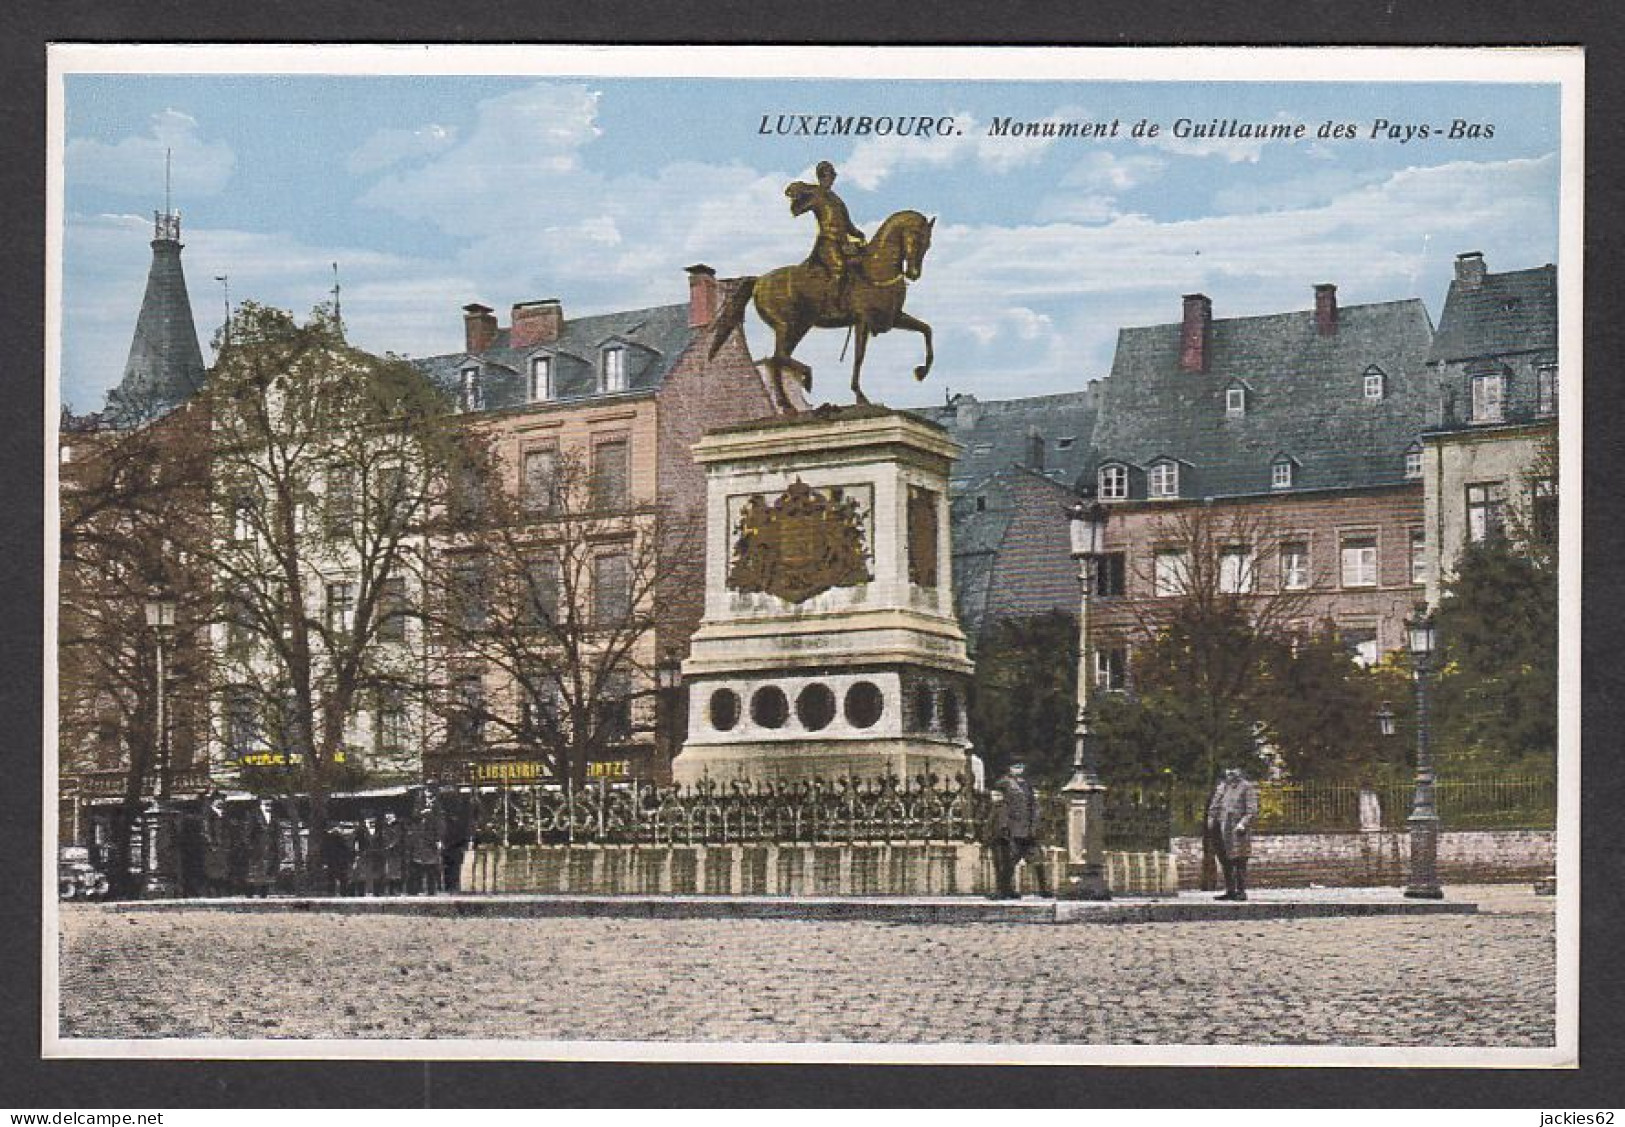 111503/ LUXEMBOURG, Monument De Guillaume Des Pays-Bas - Luxembourg - Ville